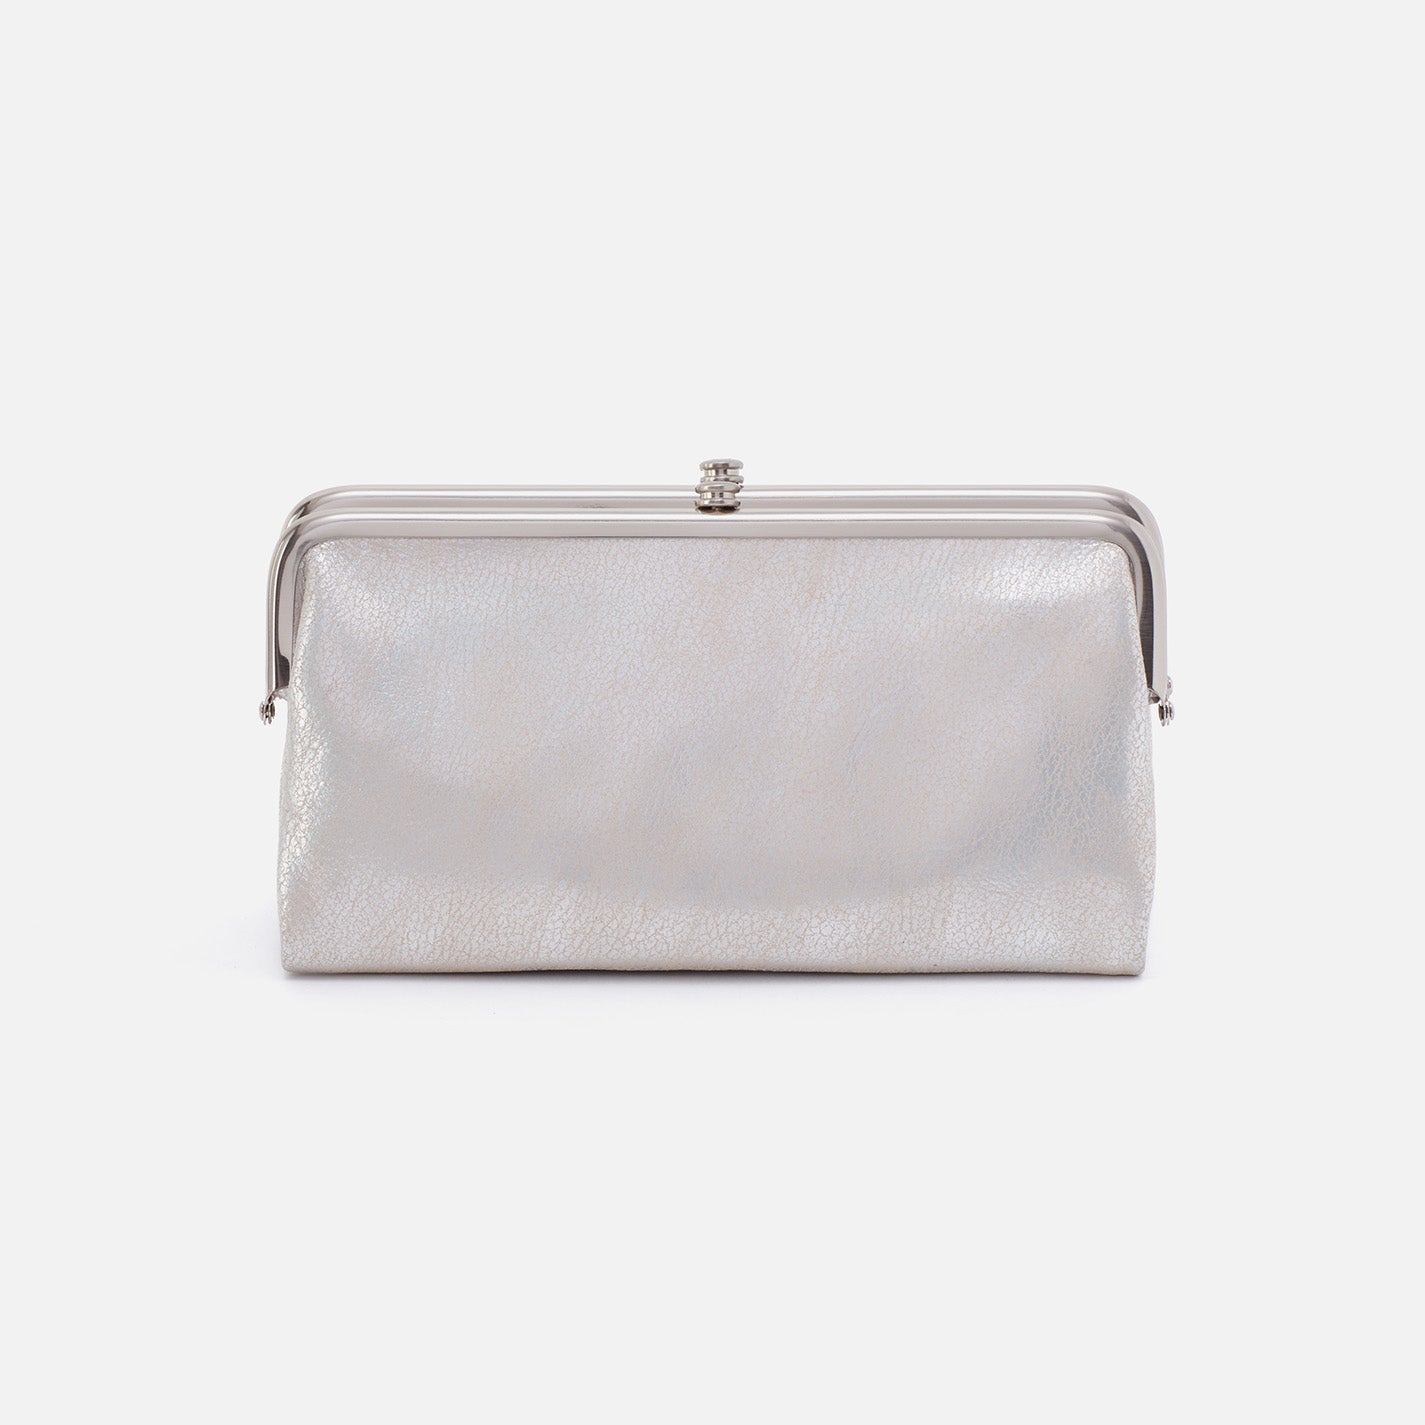 COACH Zoe Medium Patent Leather Hobo Purse Handbag Gray Silver Tone Accent